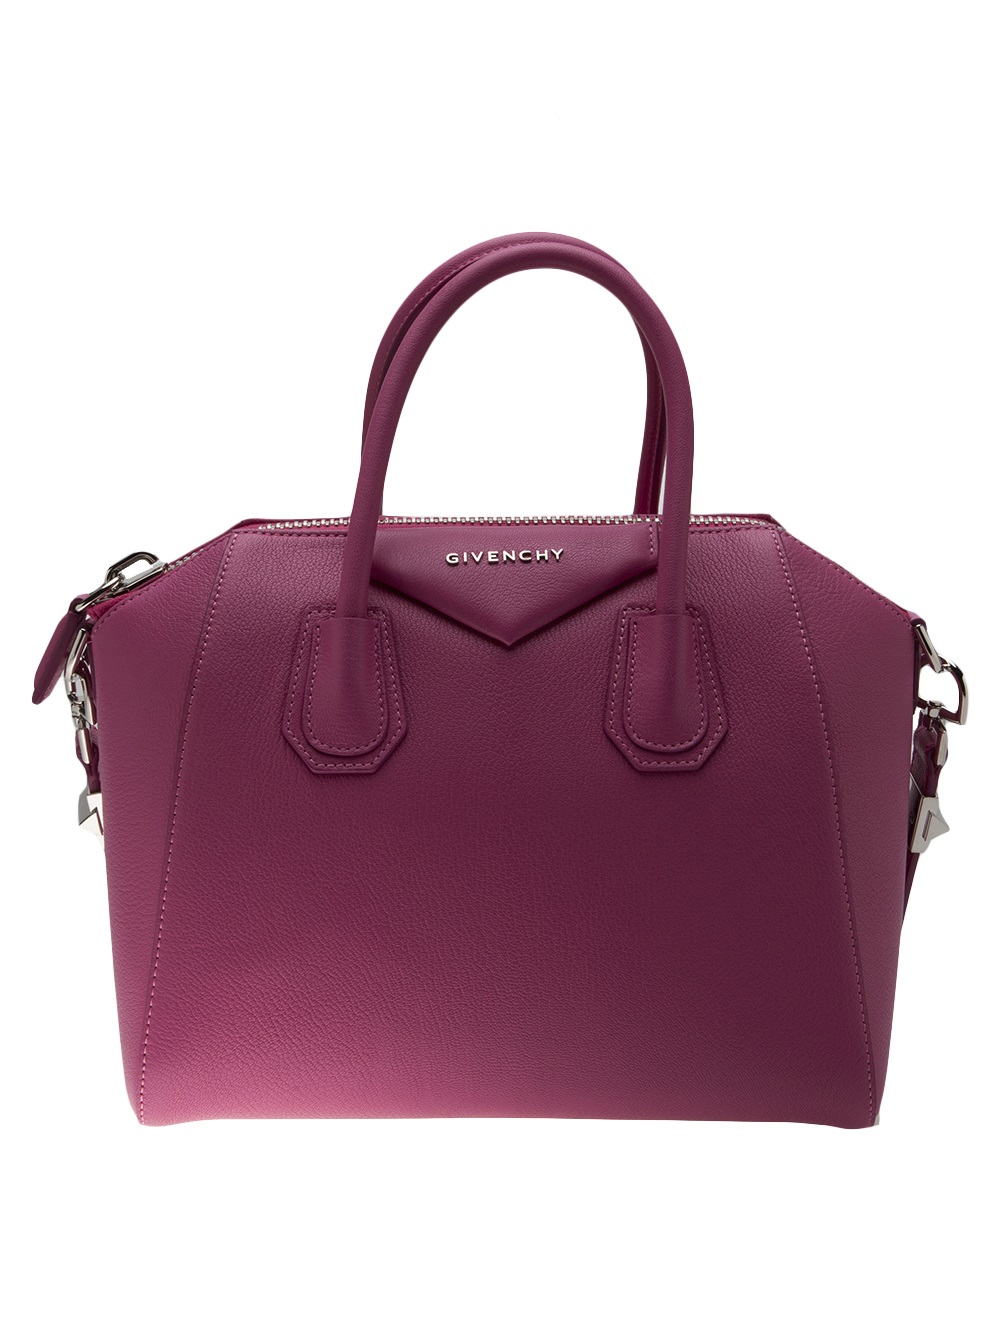 Givenchy Antigona Small Bag in Purple (pink & purple) | Lyst